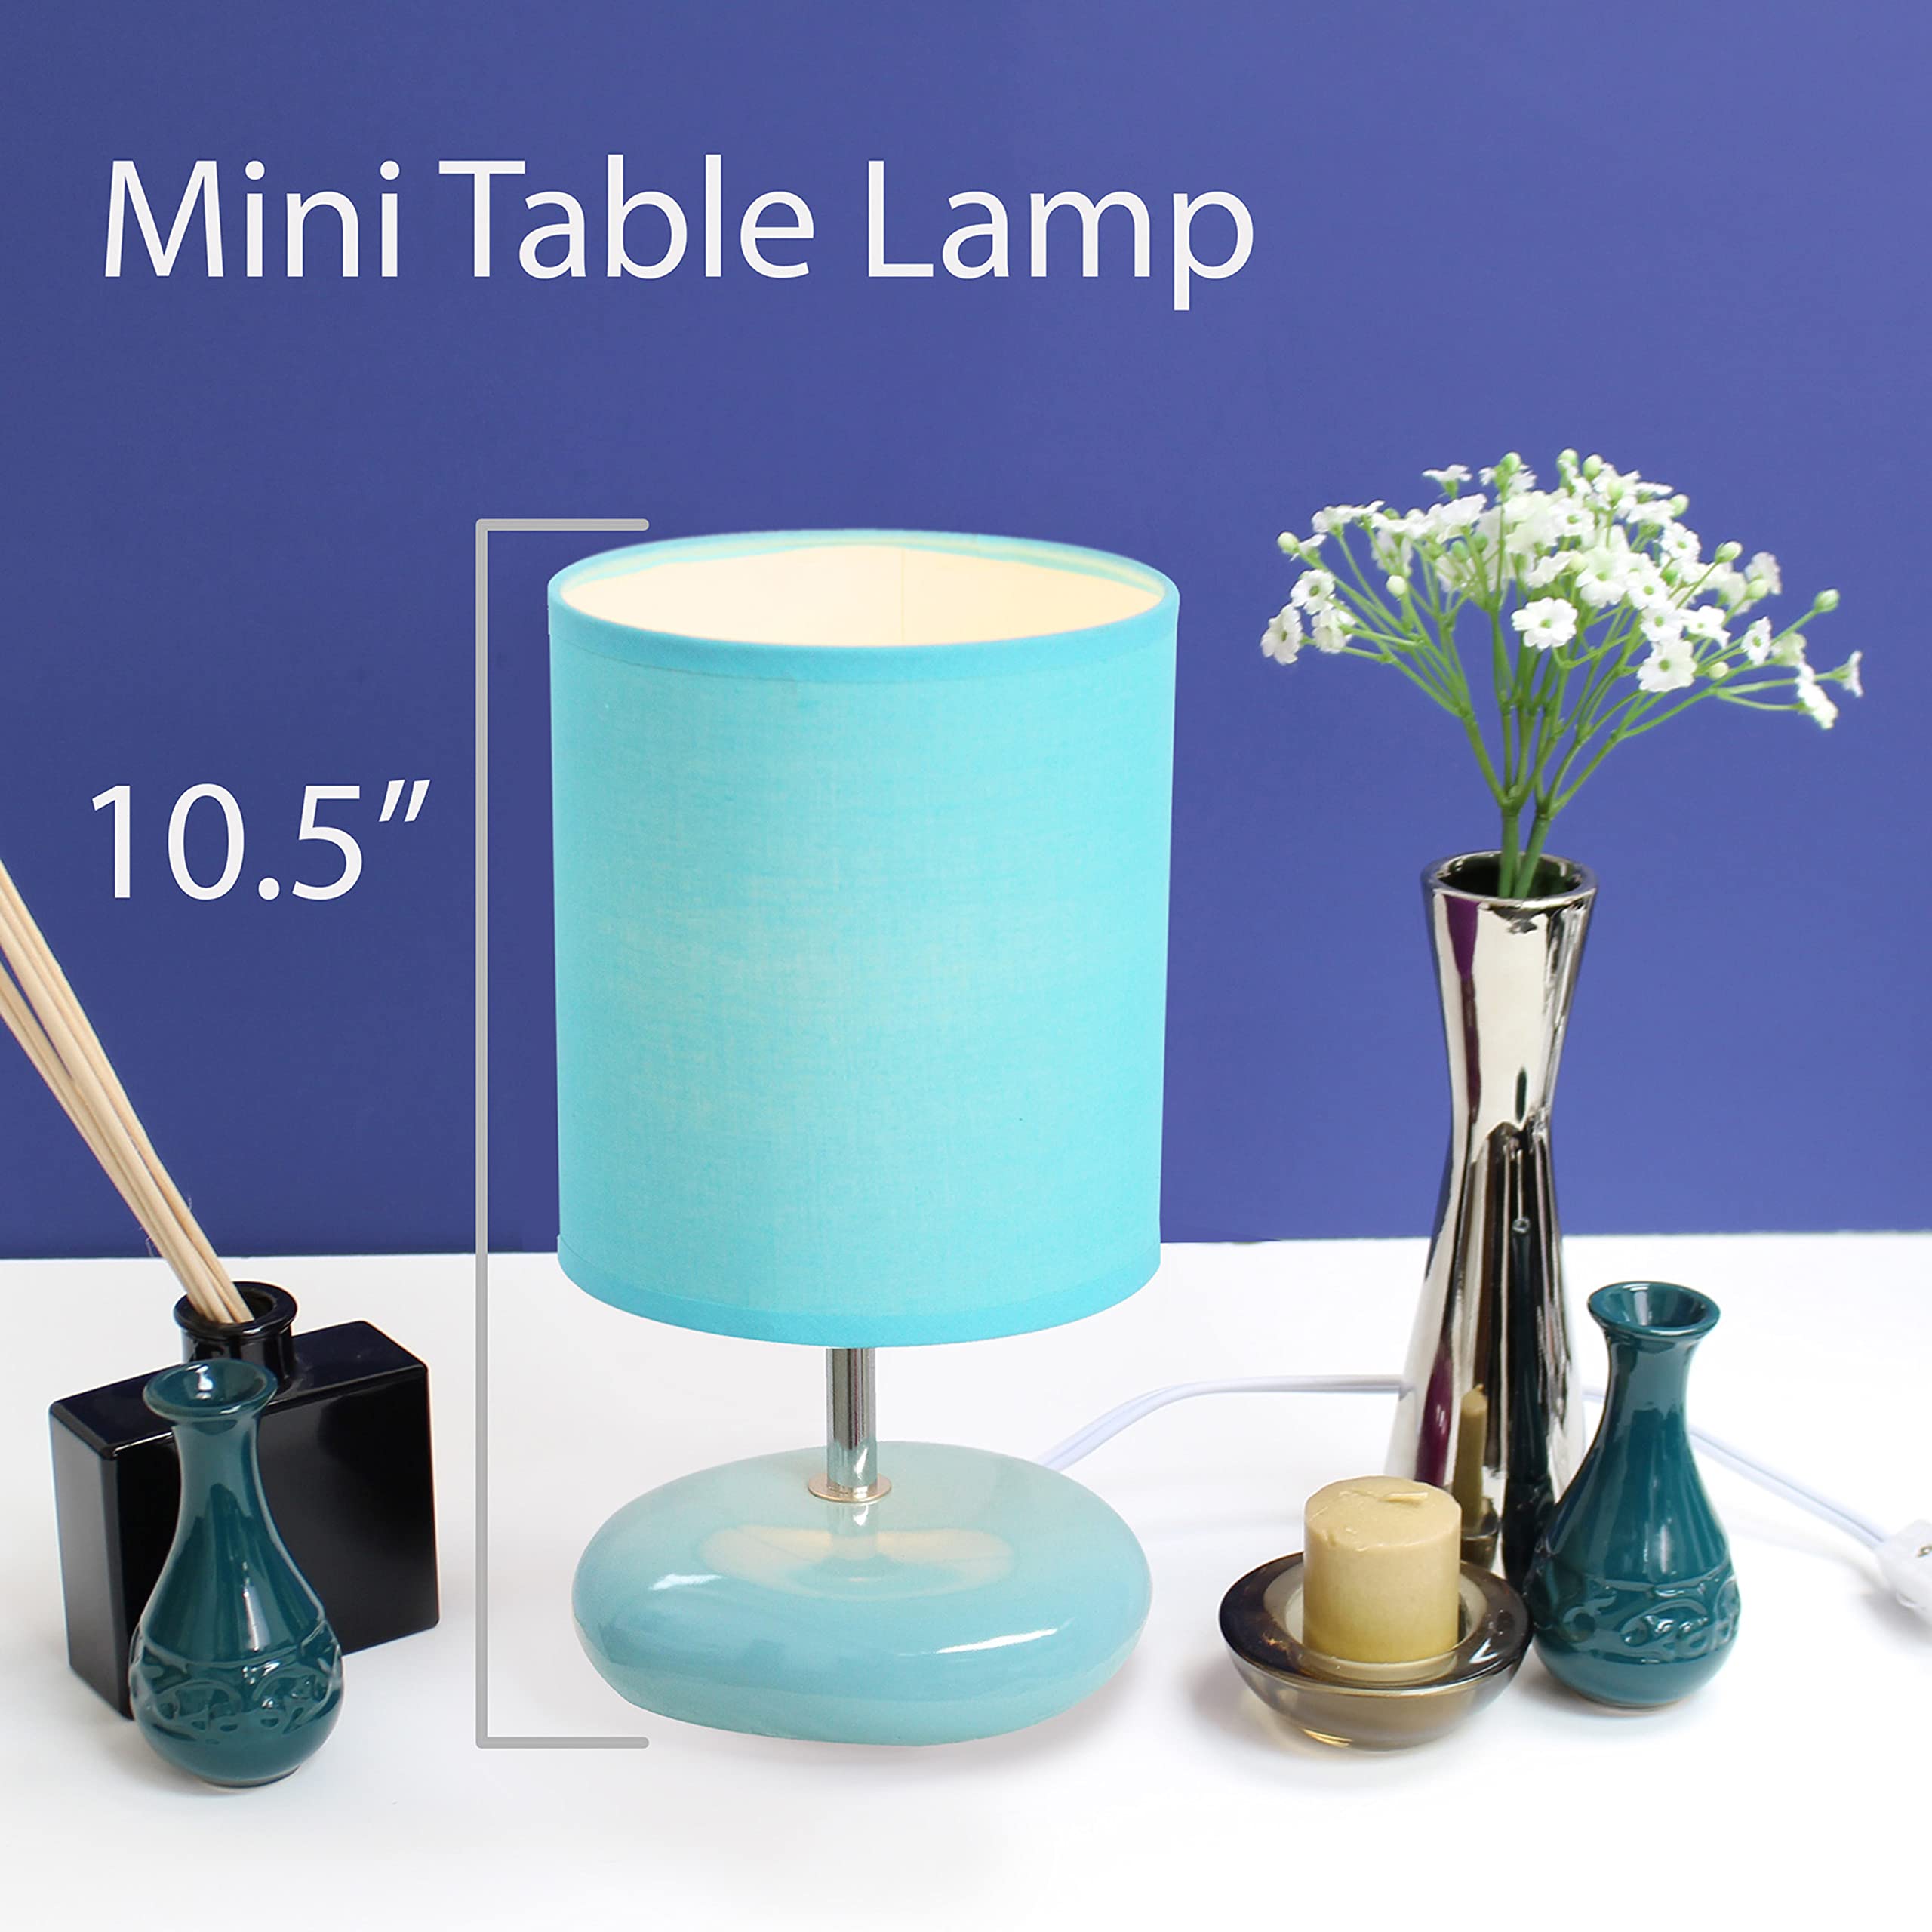 Simple Designs LT2005-BLU Stonies Small Stone Look Table Lamp, Blue 5.51 x 5.51 x 10.24